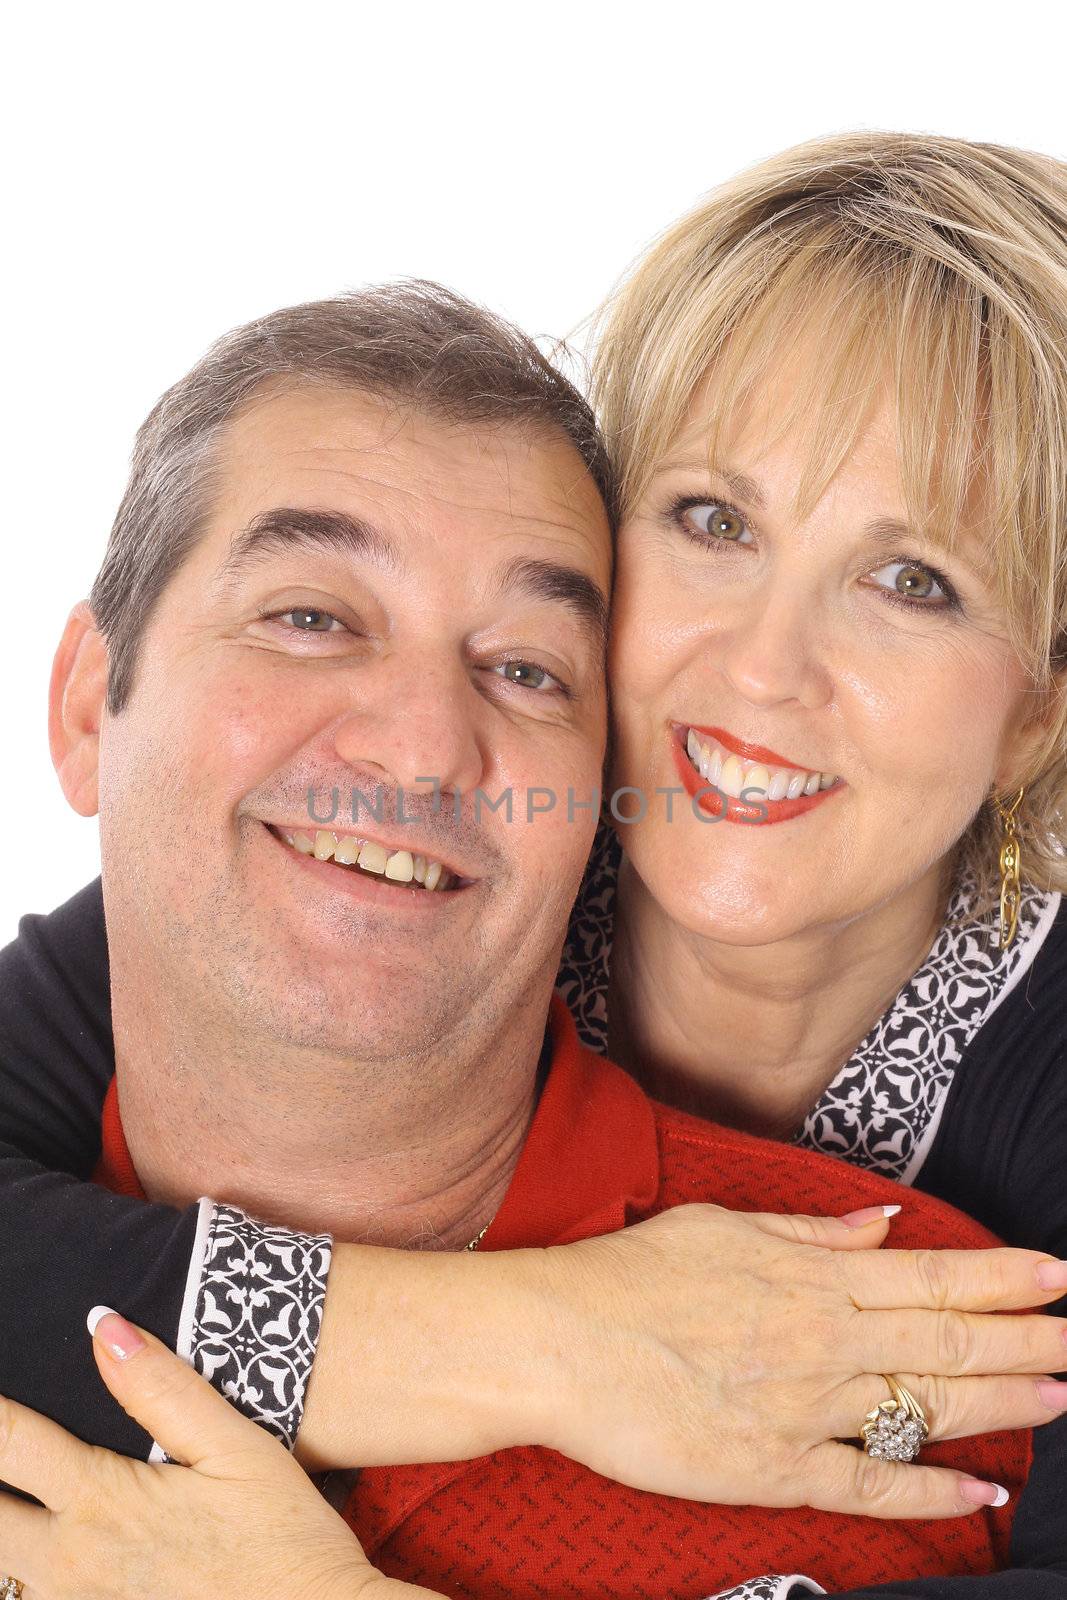 happy couple headshot isolated on white by creativestock